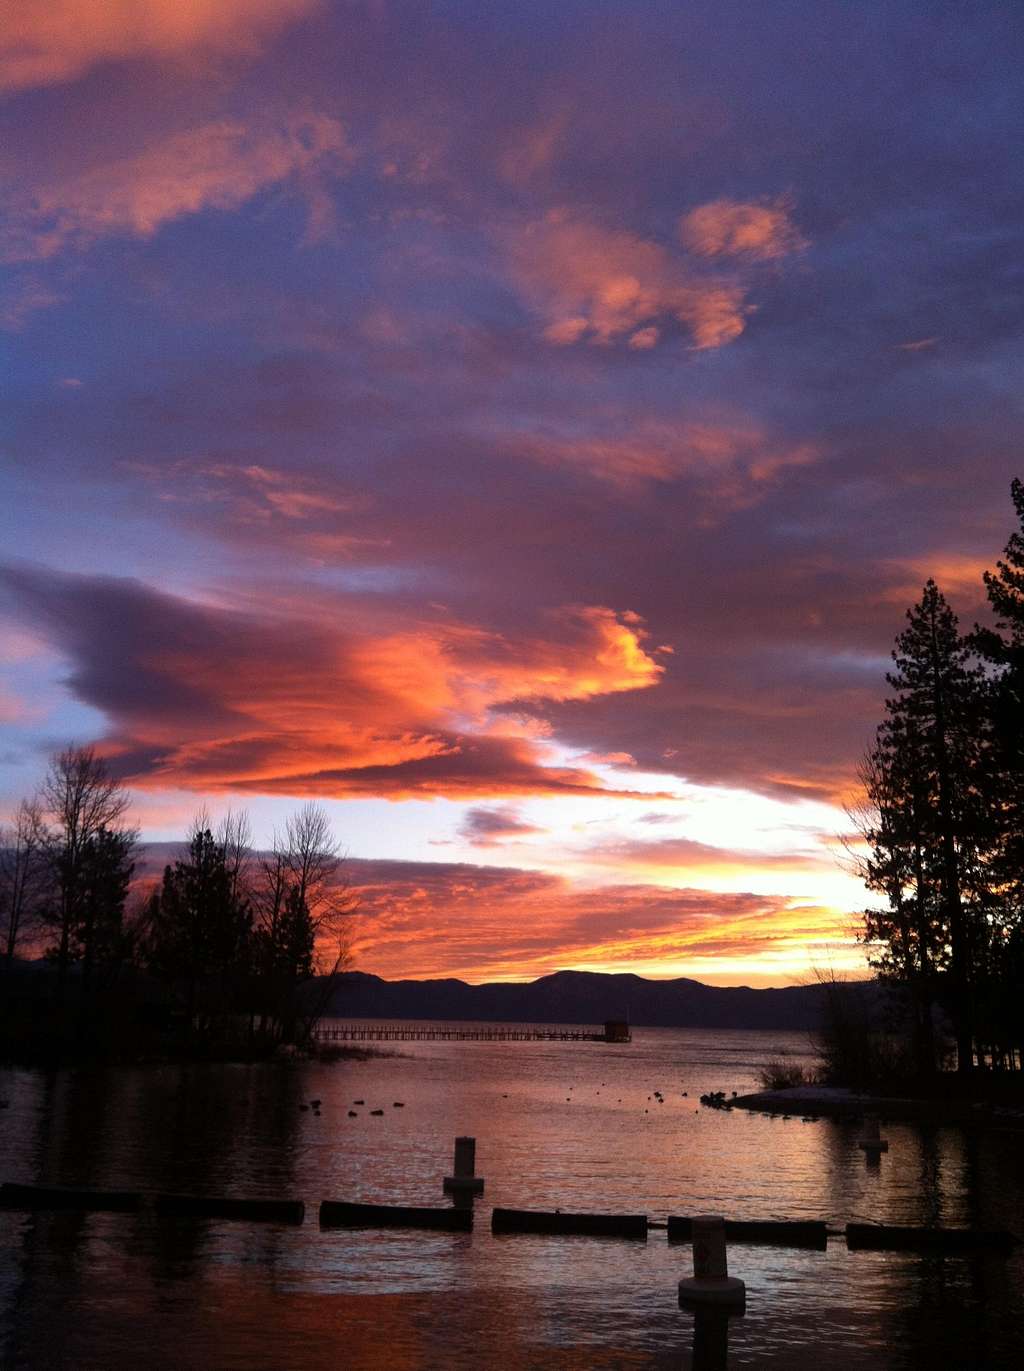 Lake Tahoe Sunrise